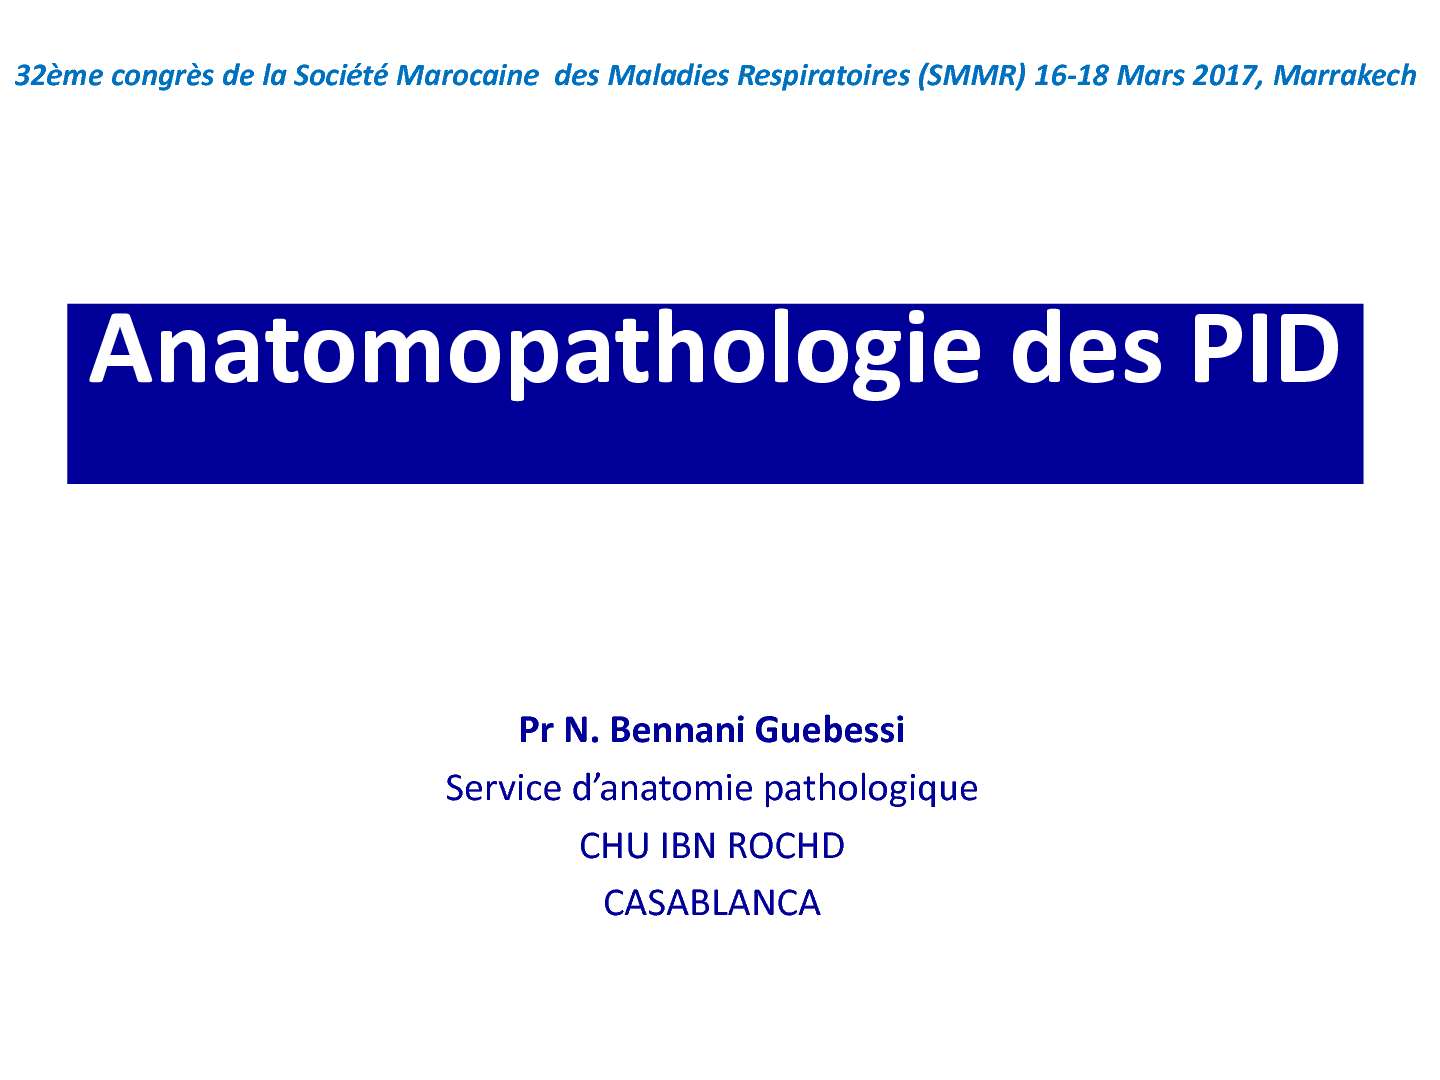 Anatomopathologie des PID. N. BENNANI (Casablanca)